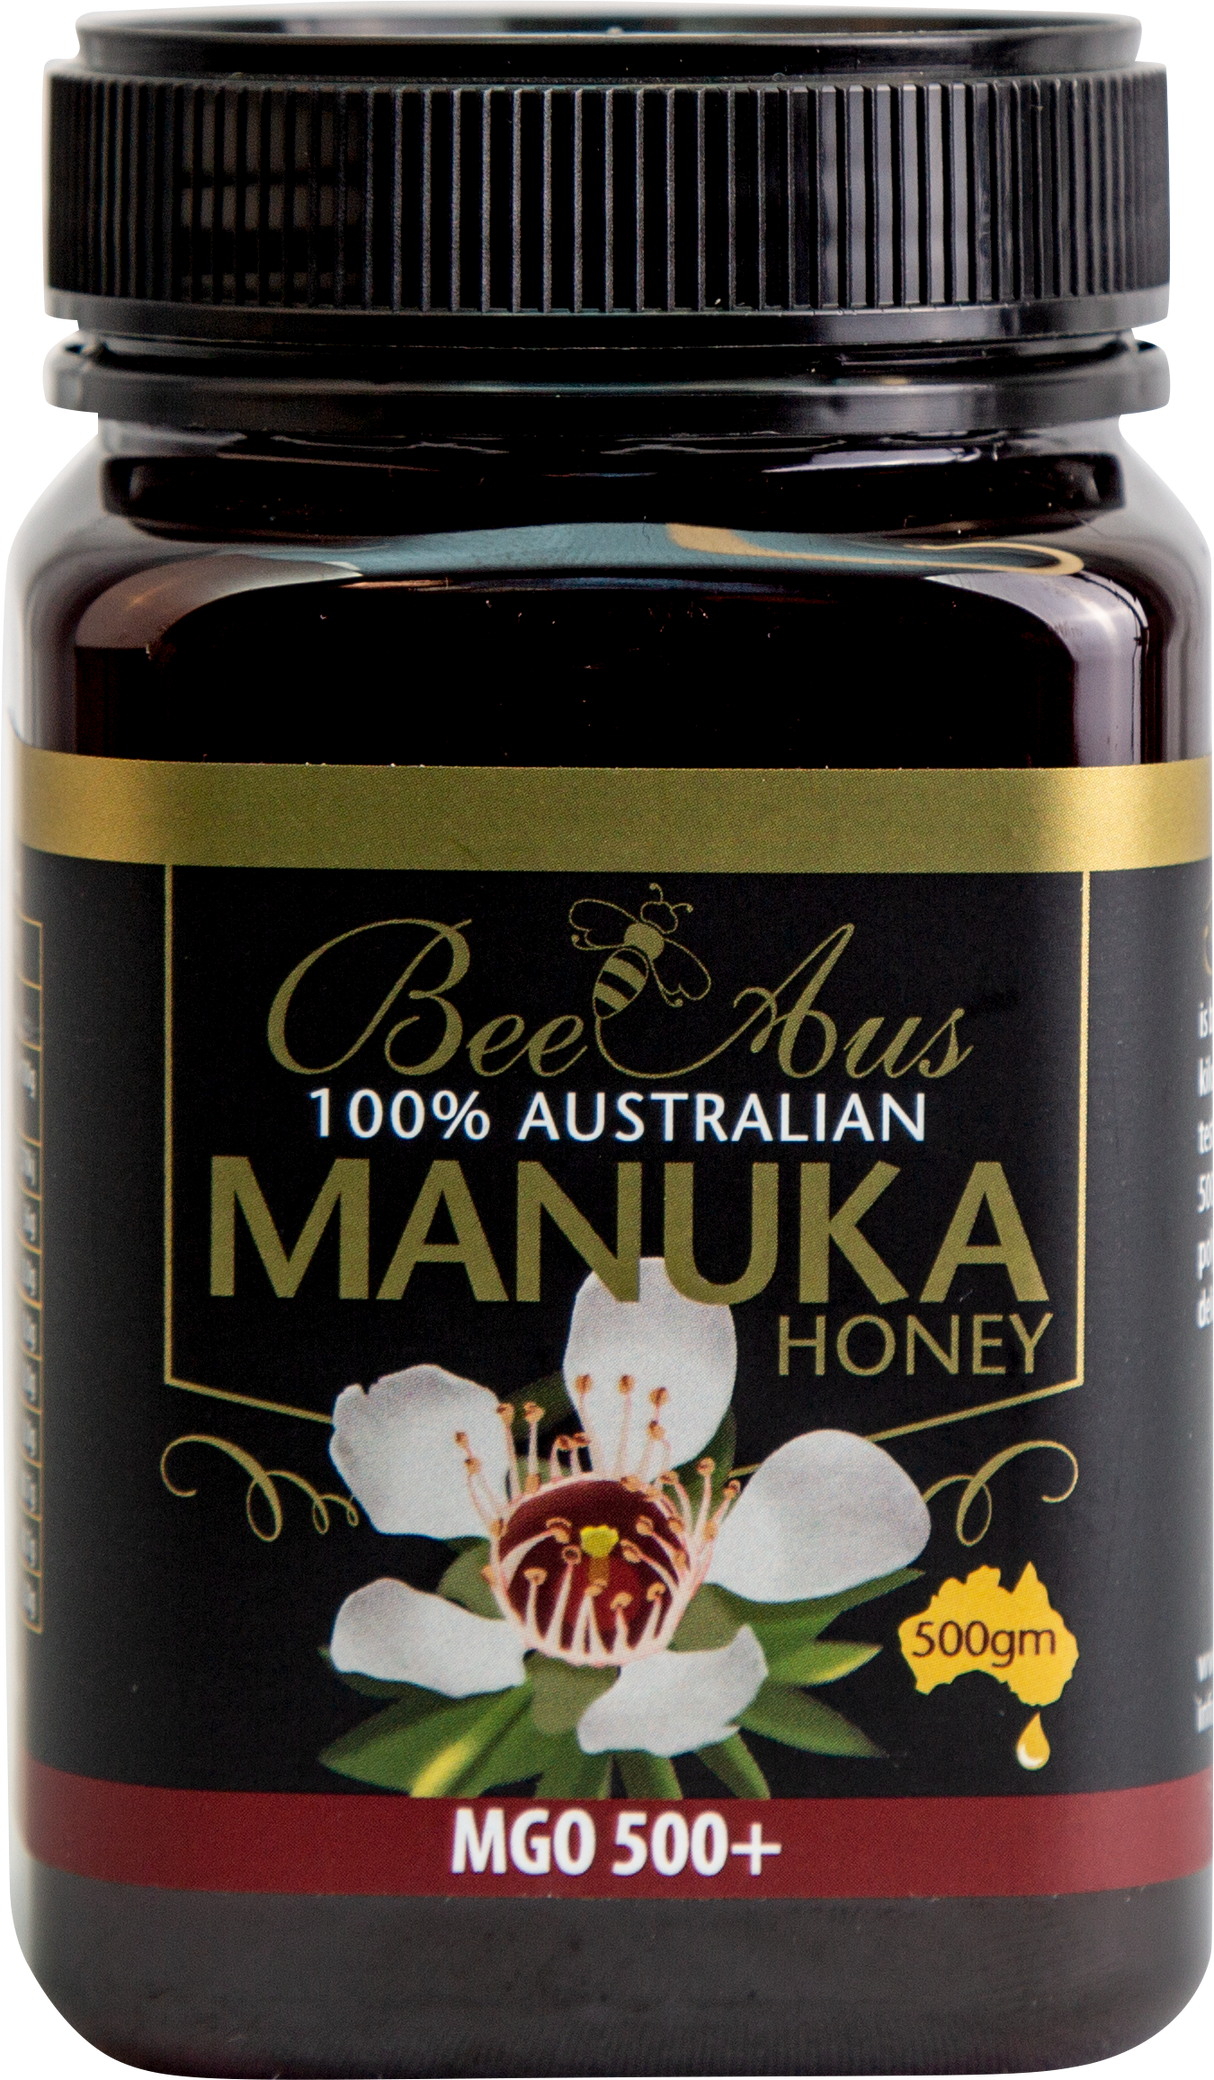 Australia Manuka Honey - 500 Grams - 500+ MGO